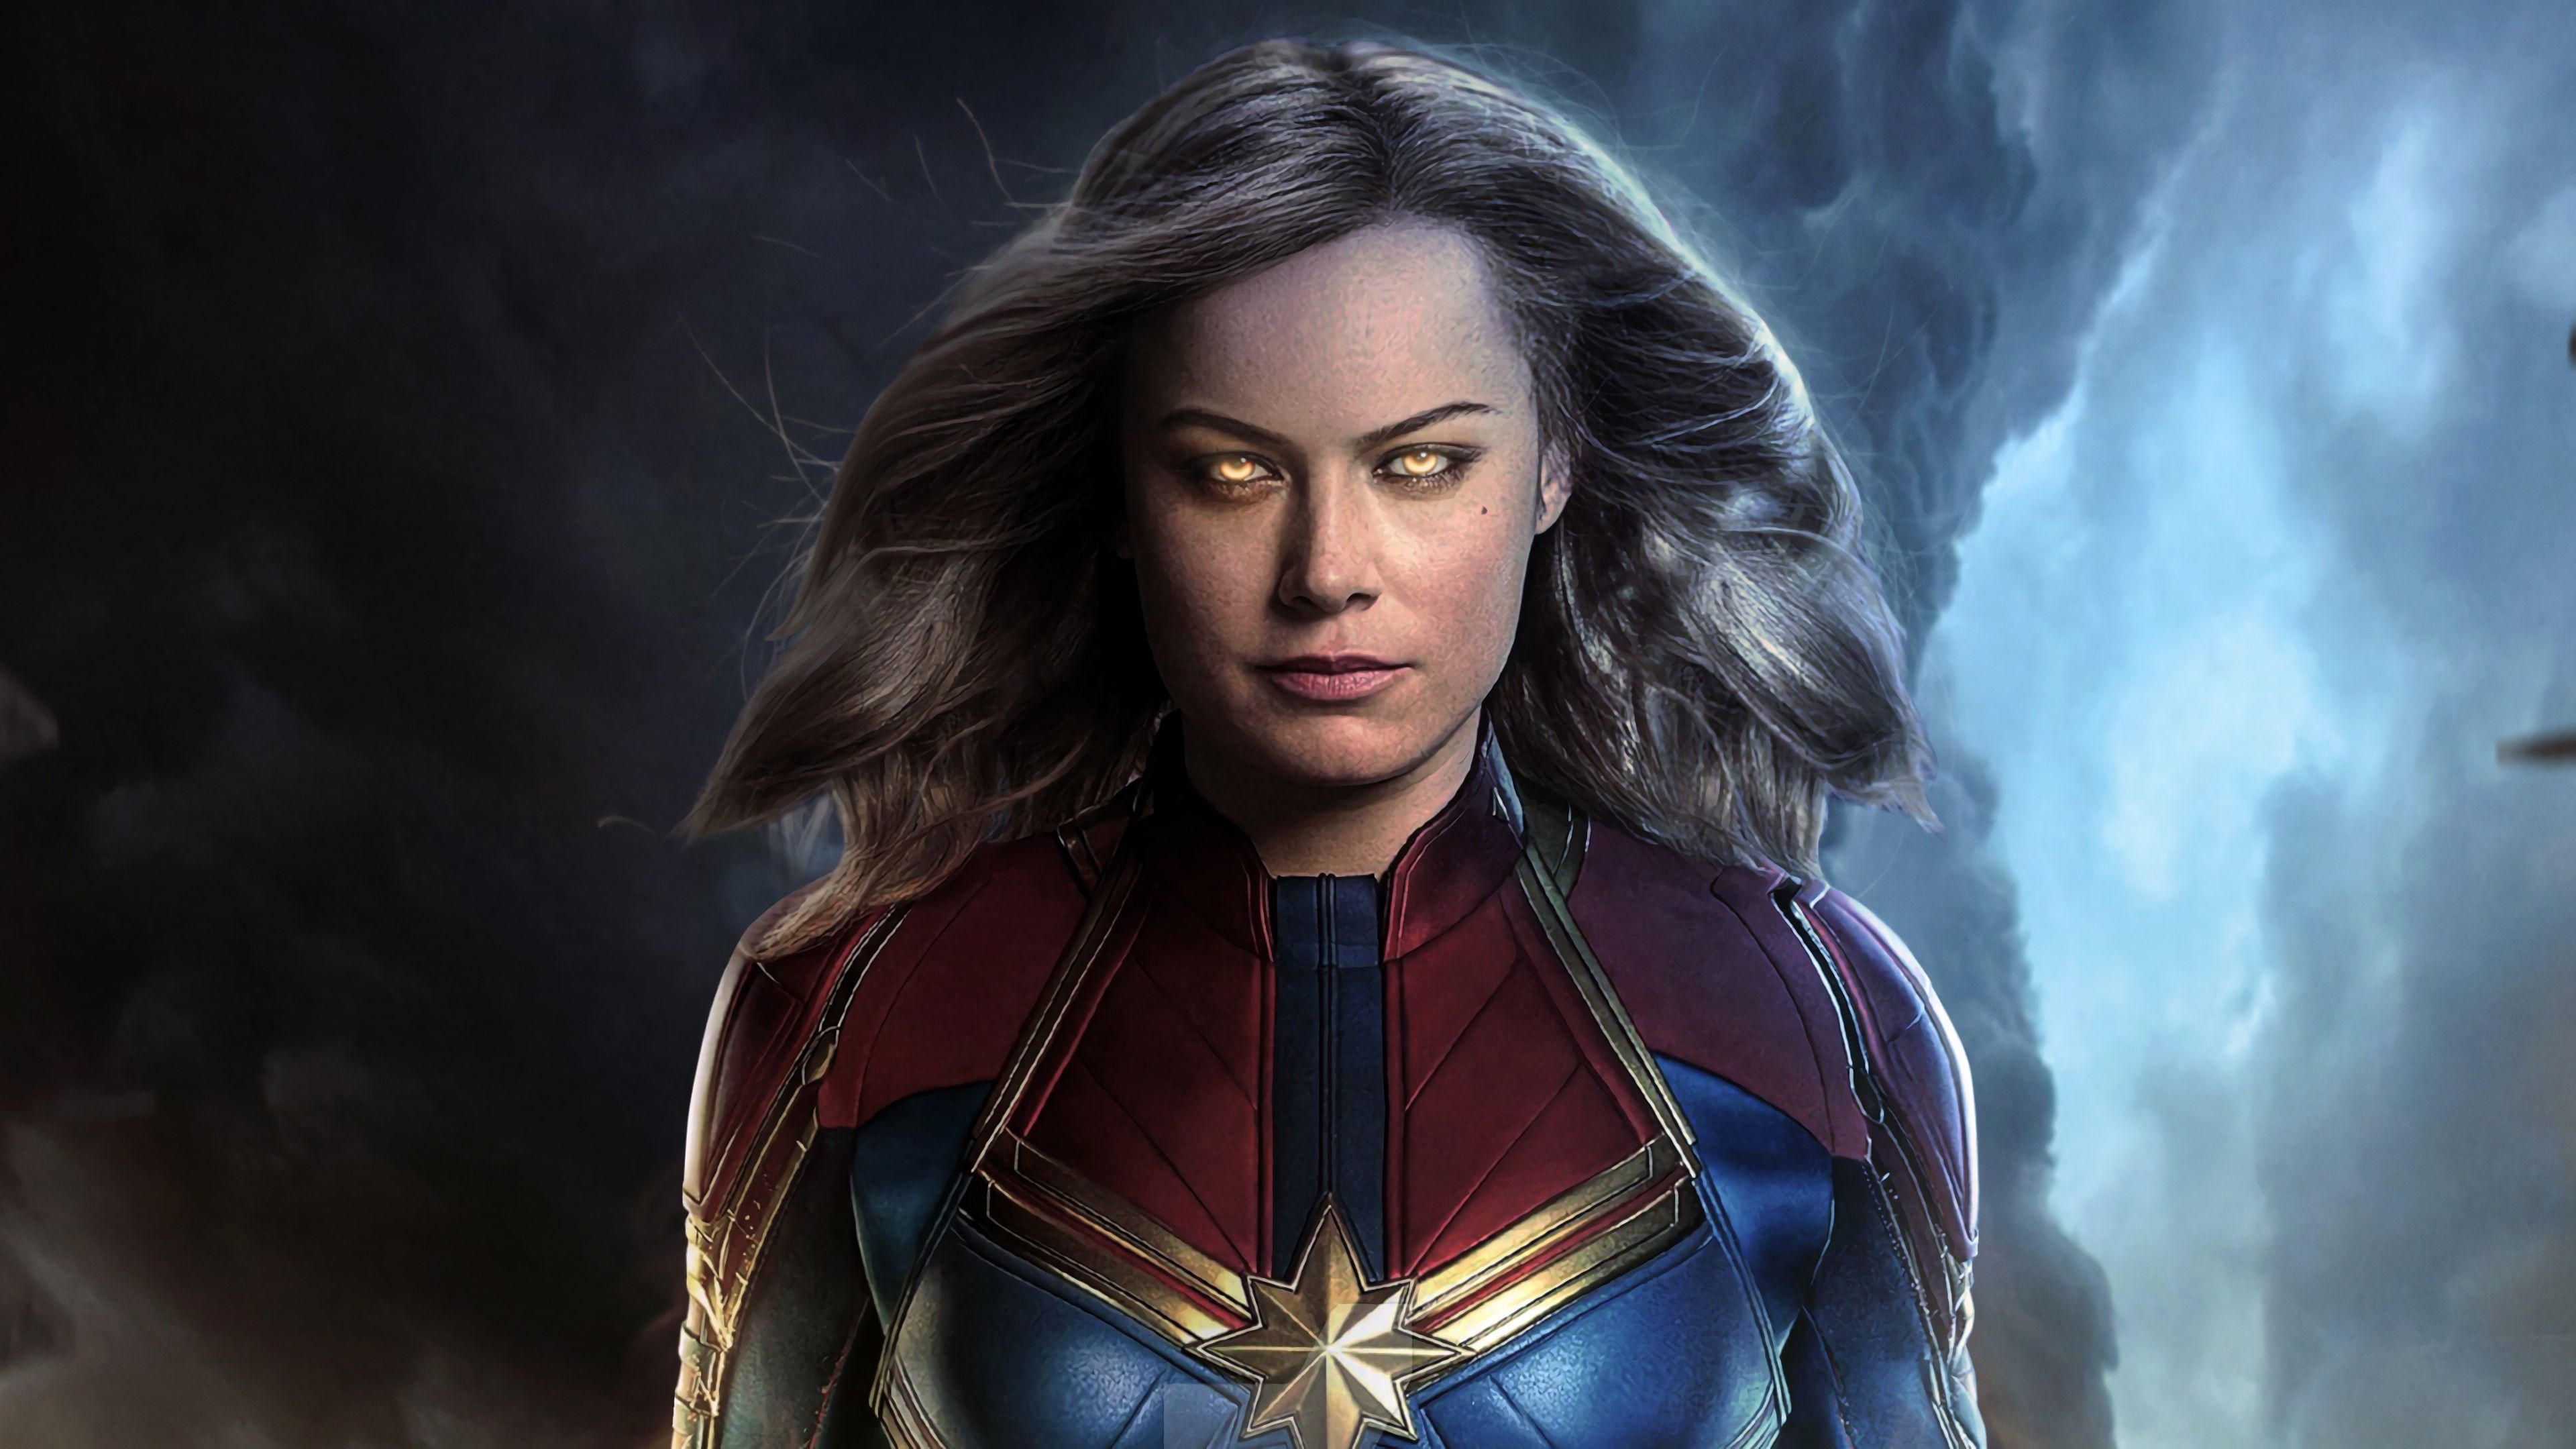 Wallpaper 4k Captain Marvel Movie 2019 .pixel4k.com